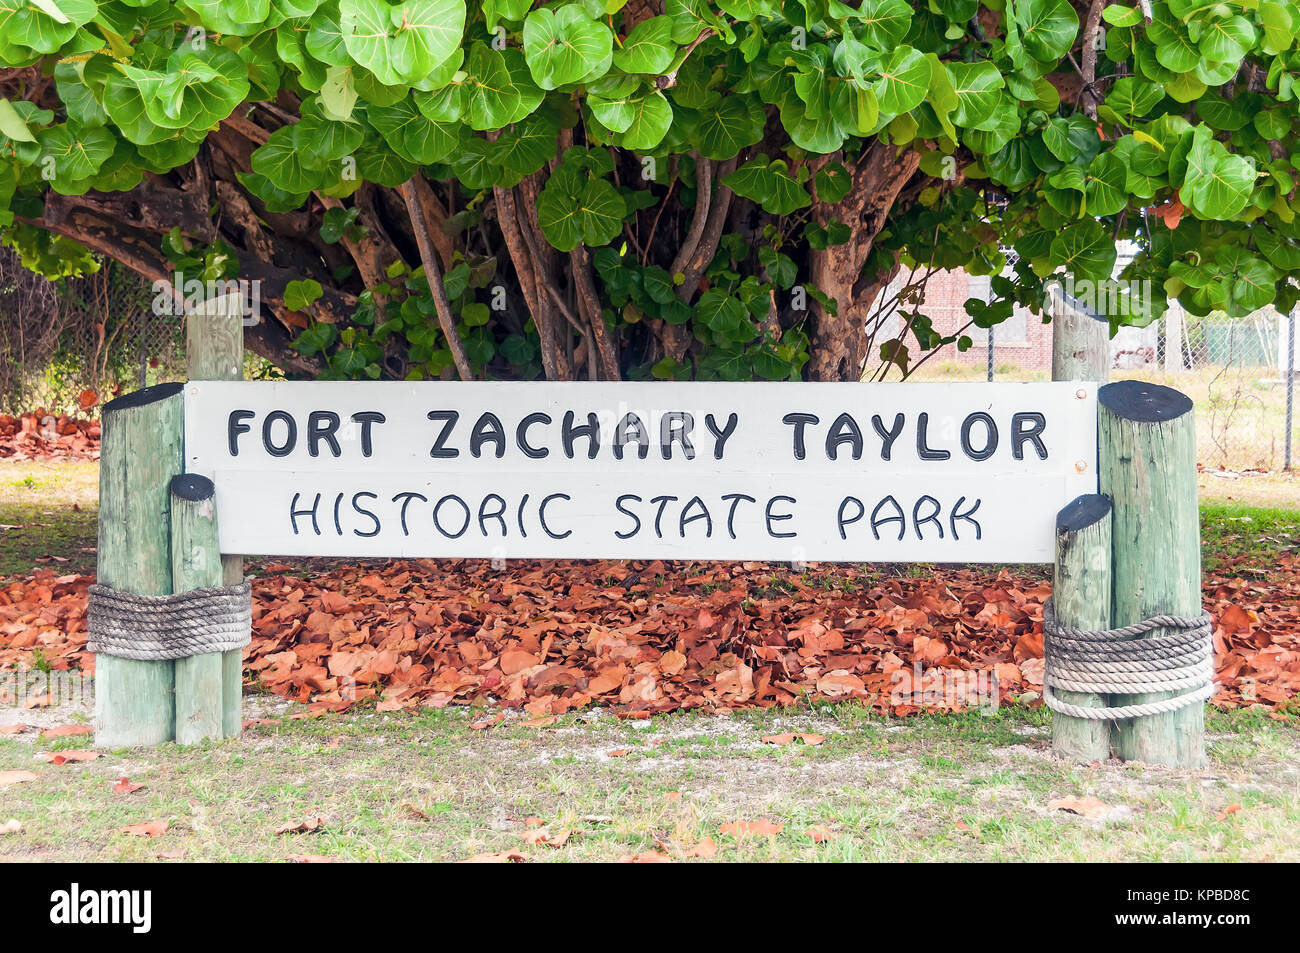 Fort Zachary Taylor Historic State Park Zeichen benath seagrape Baum, Key West, Florida Stockfoto